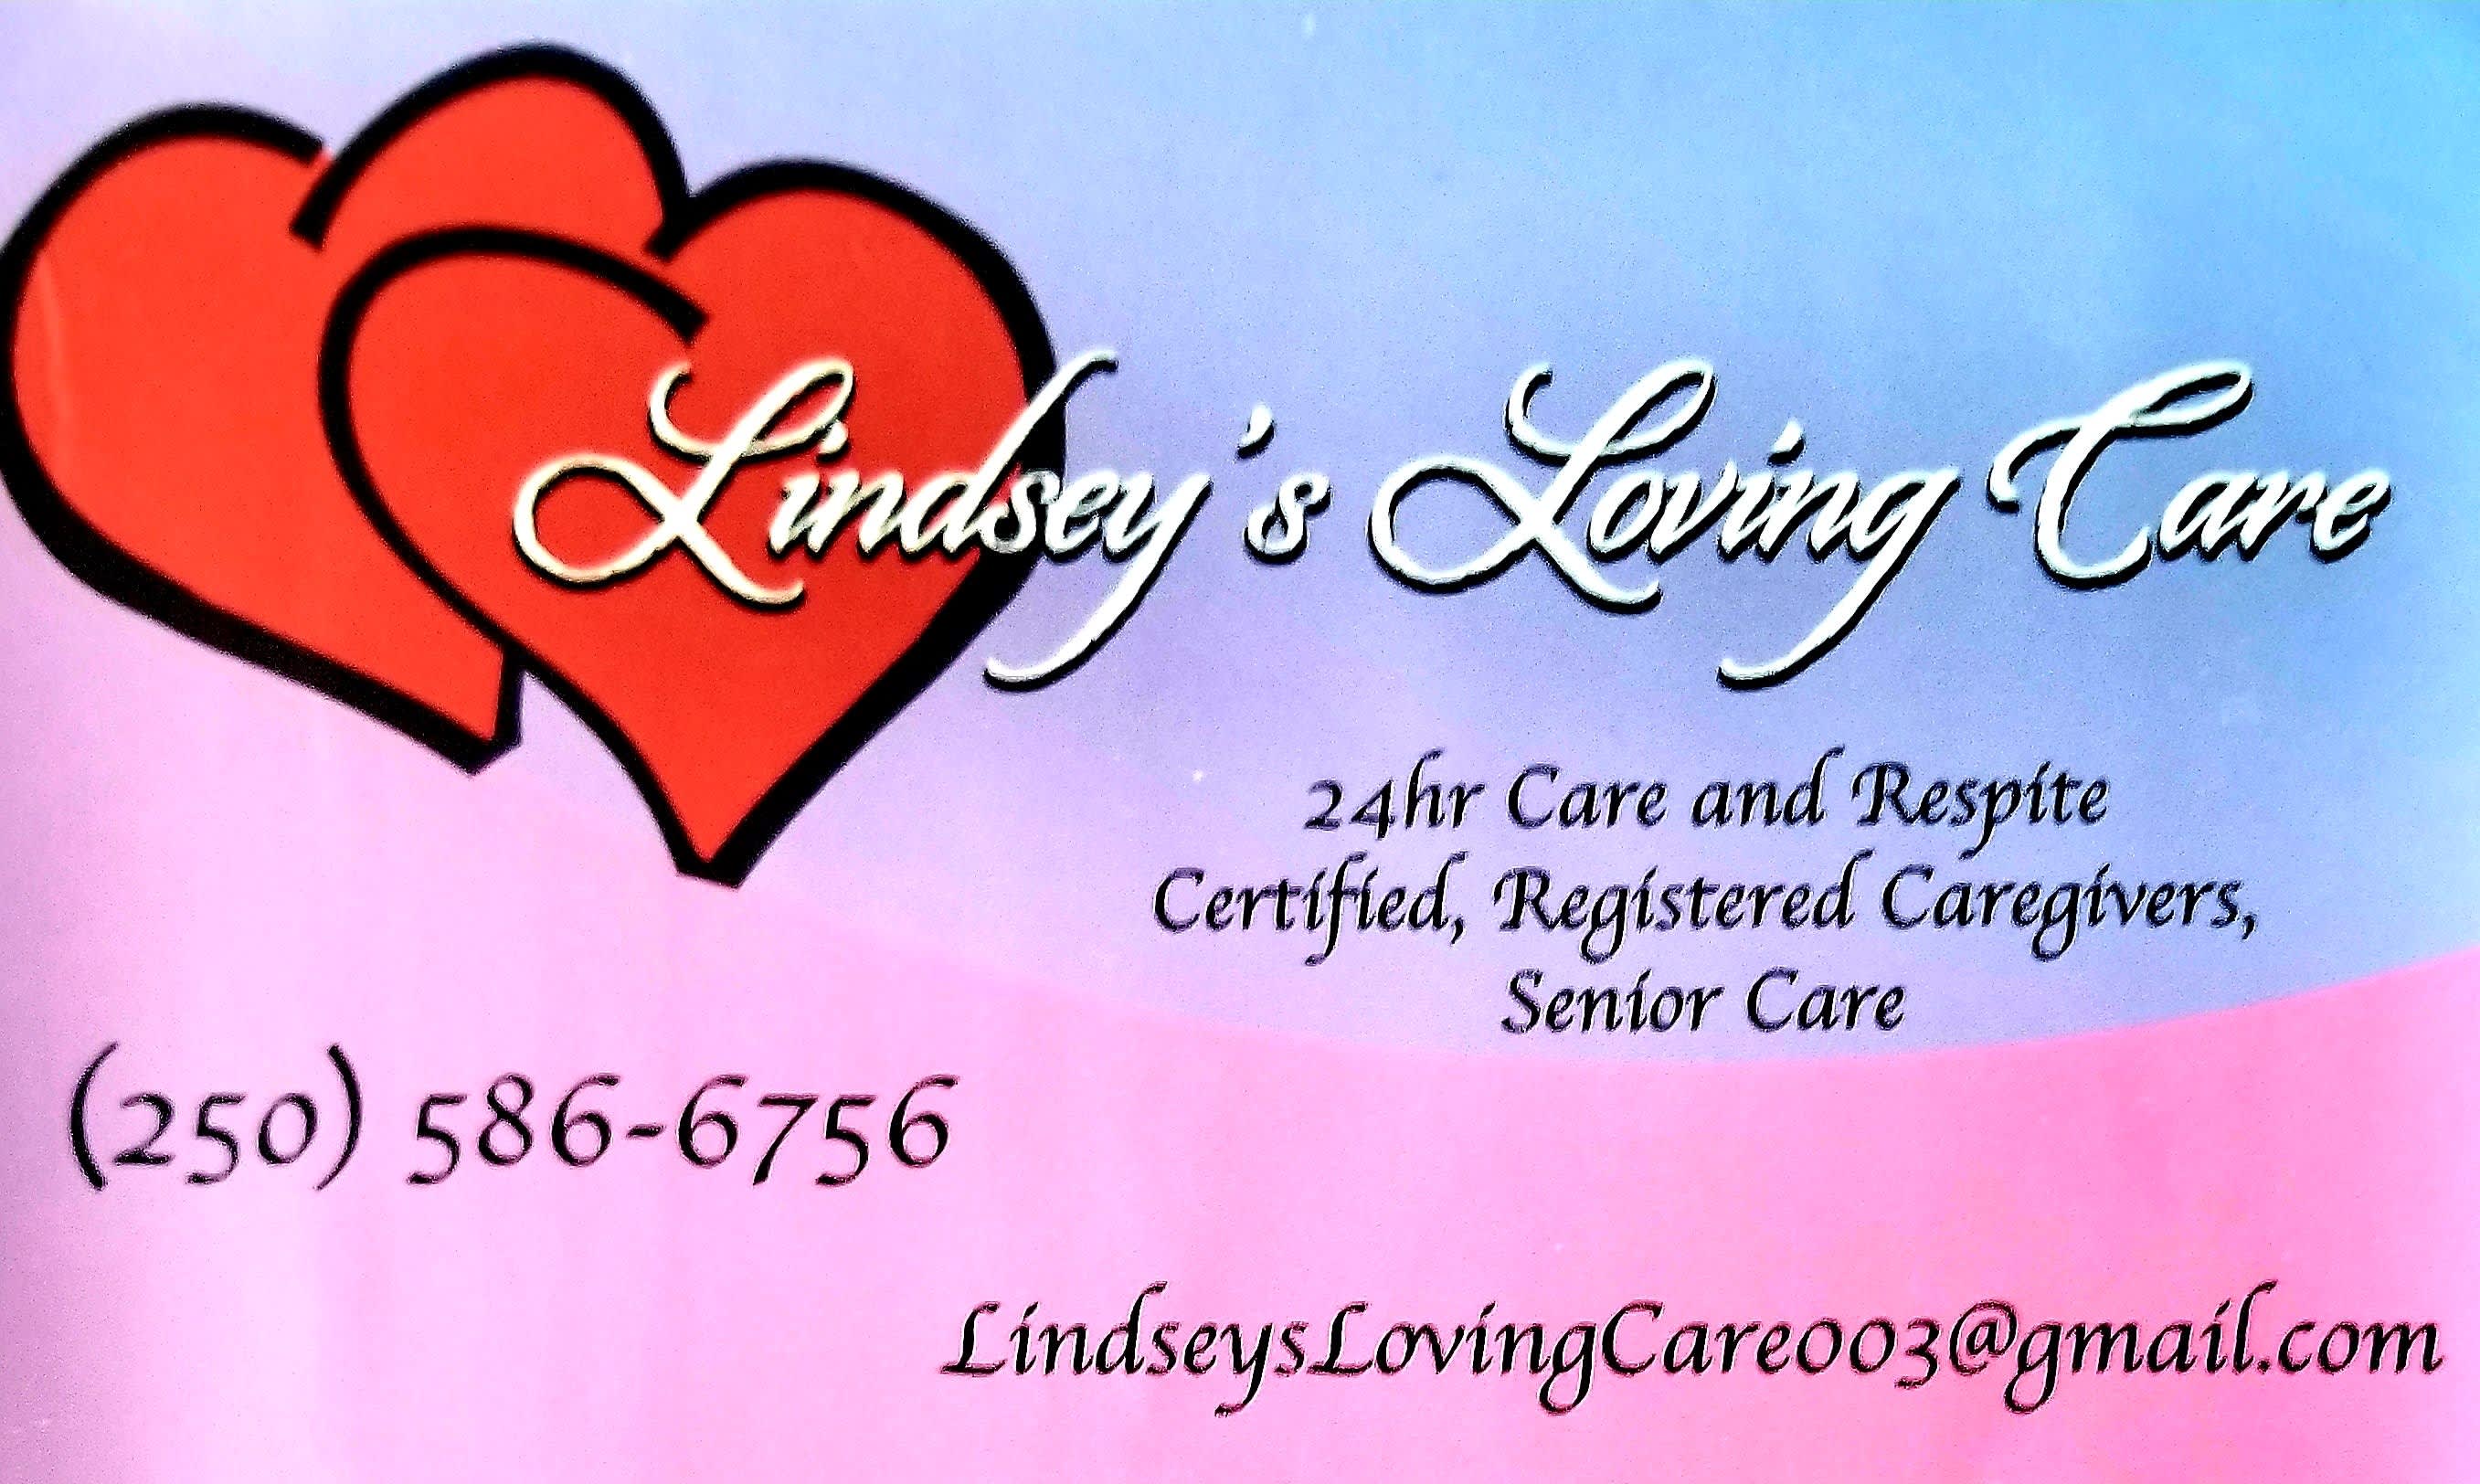 Lindsey's Loving Care